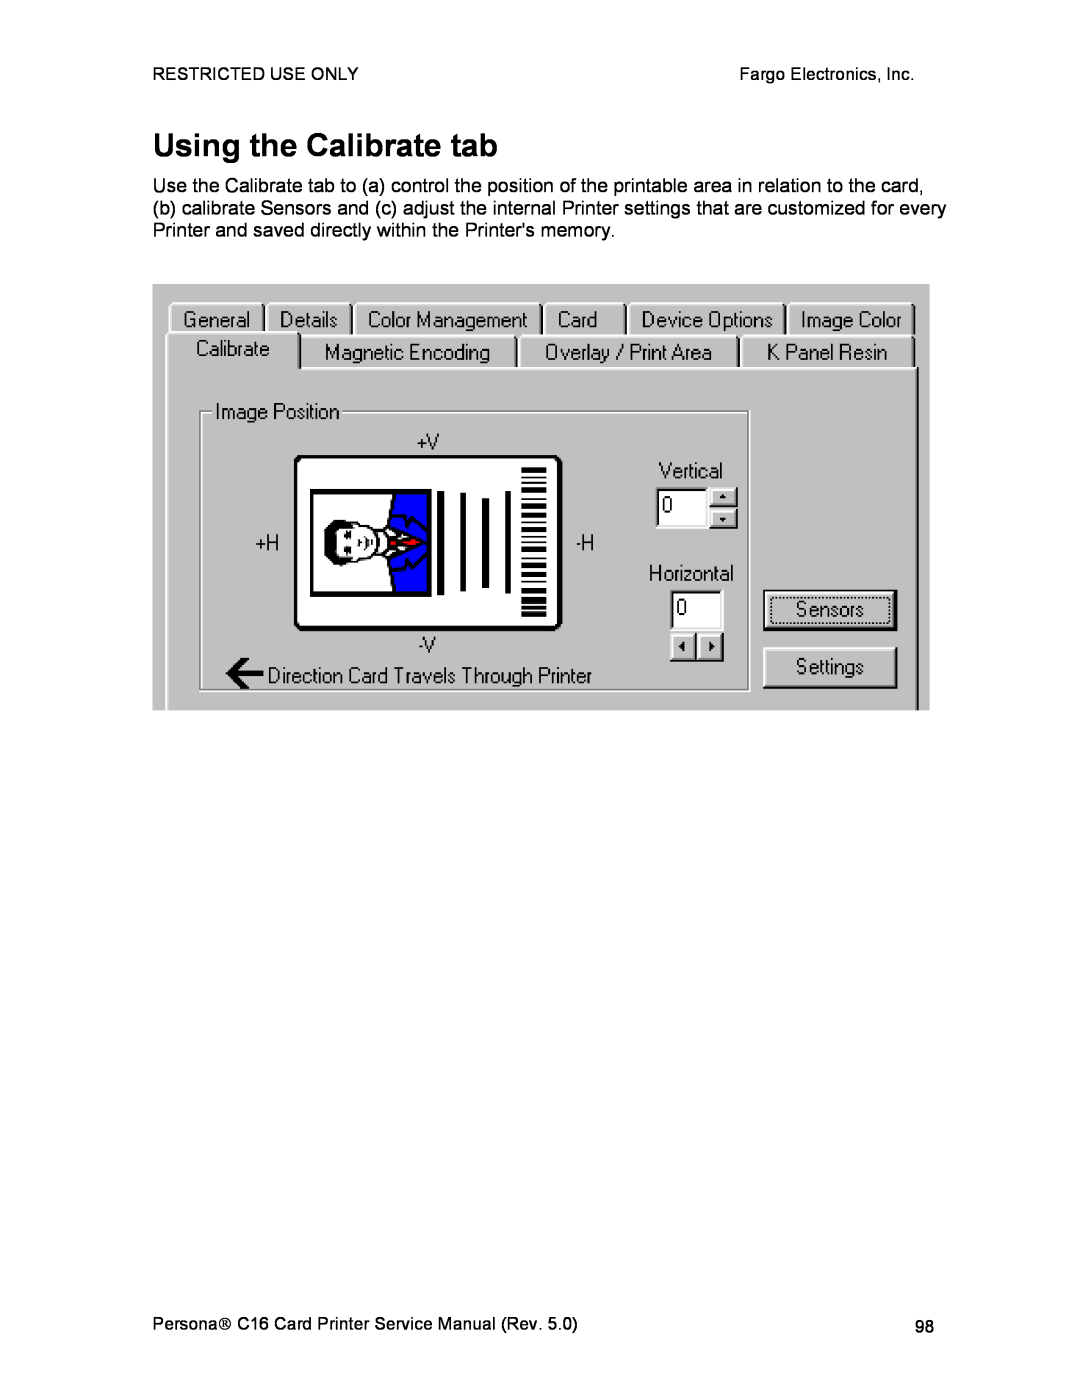 FARGO electronic C16 service manual Using the Calibrate tab 